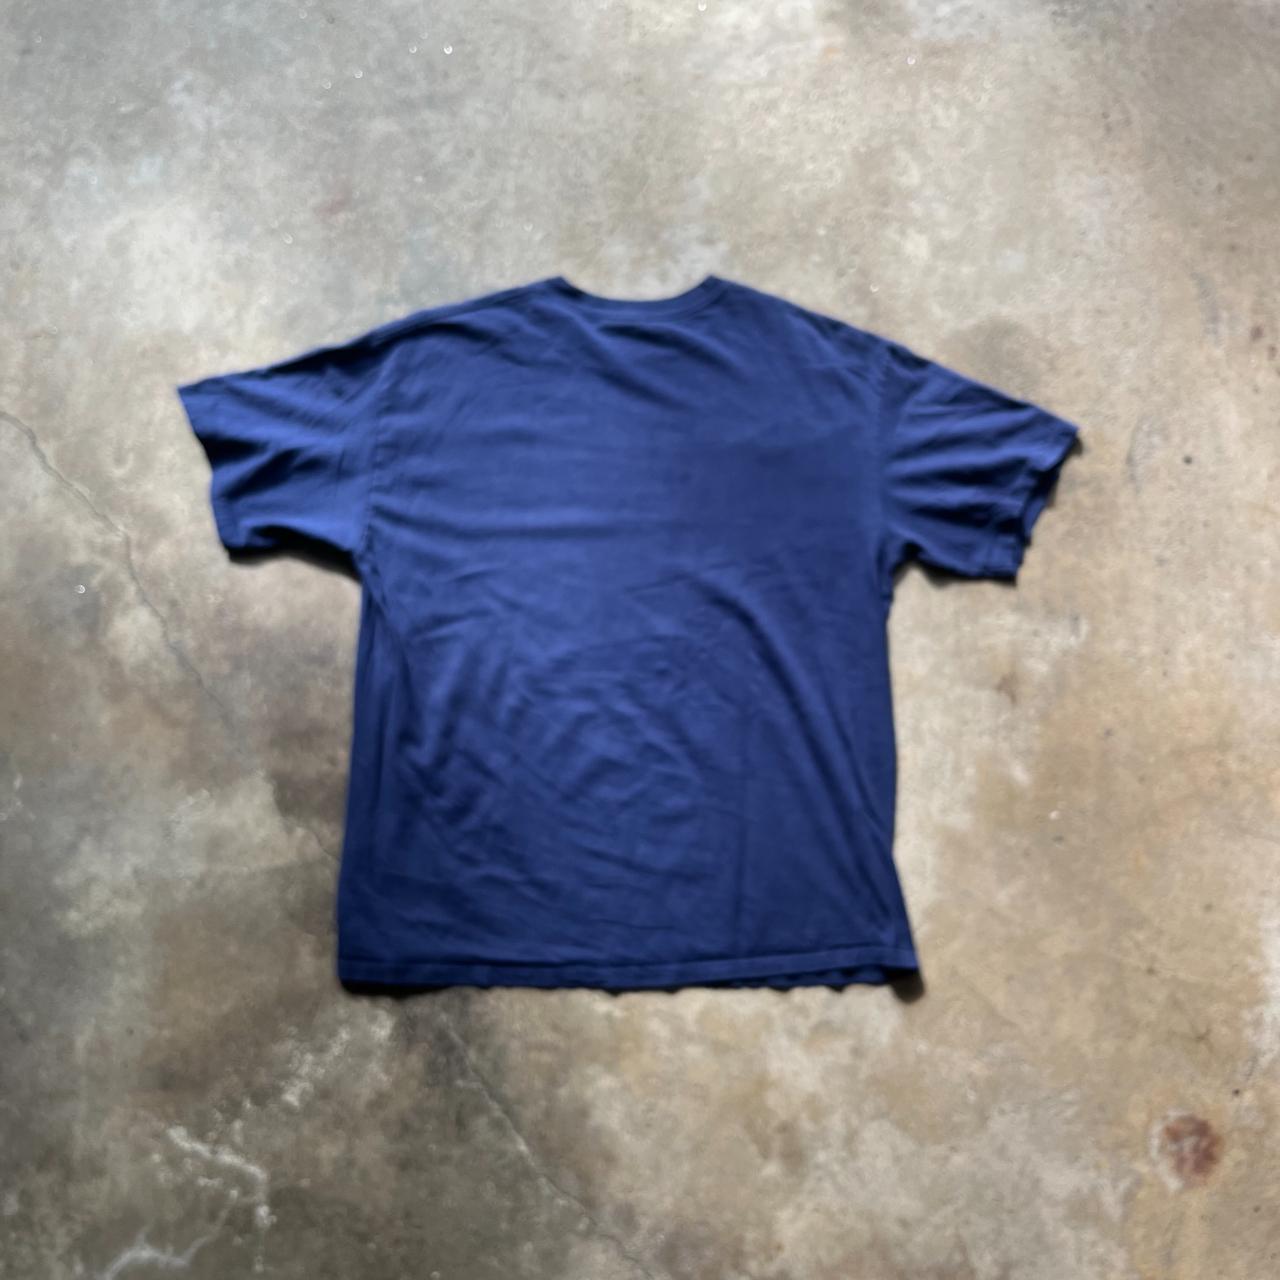 Adidas Men's Navy T-shirt